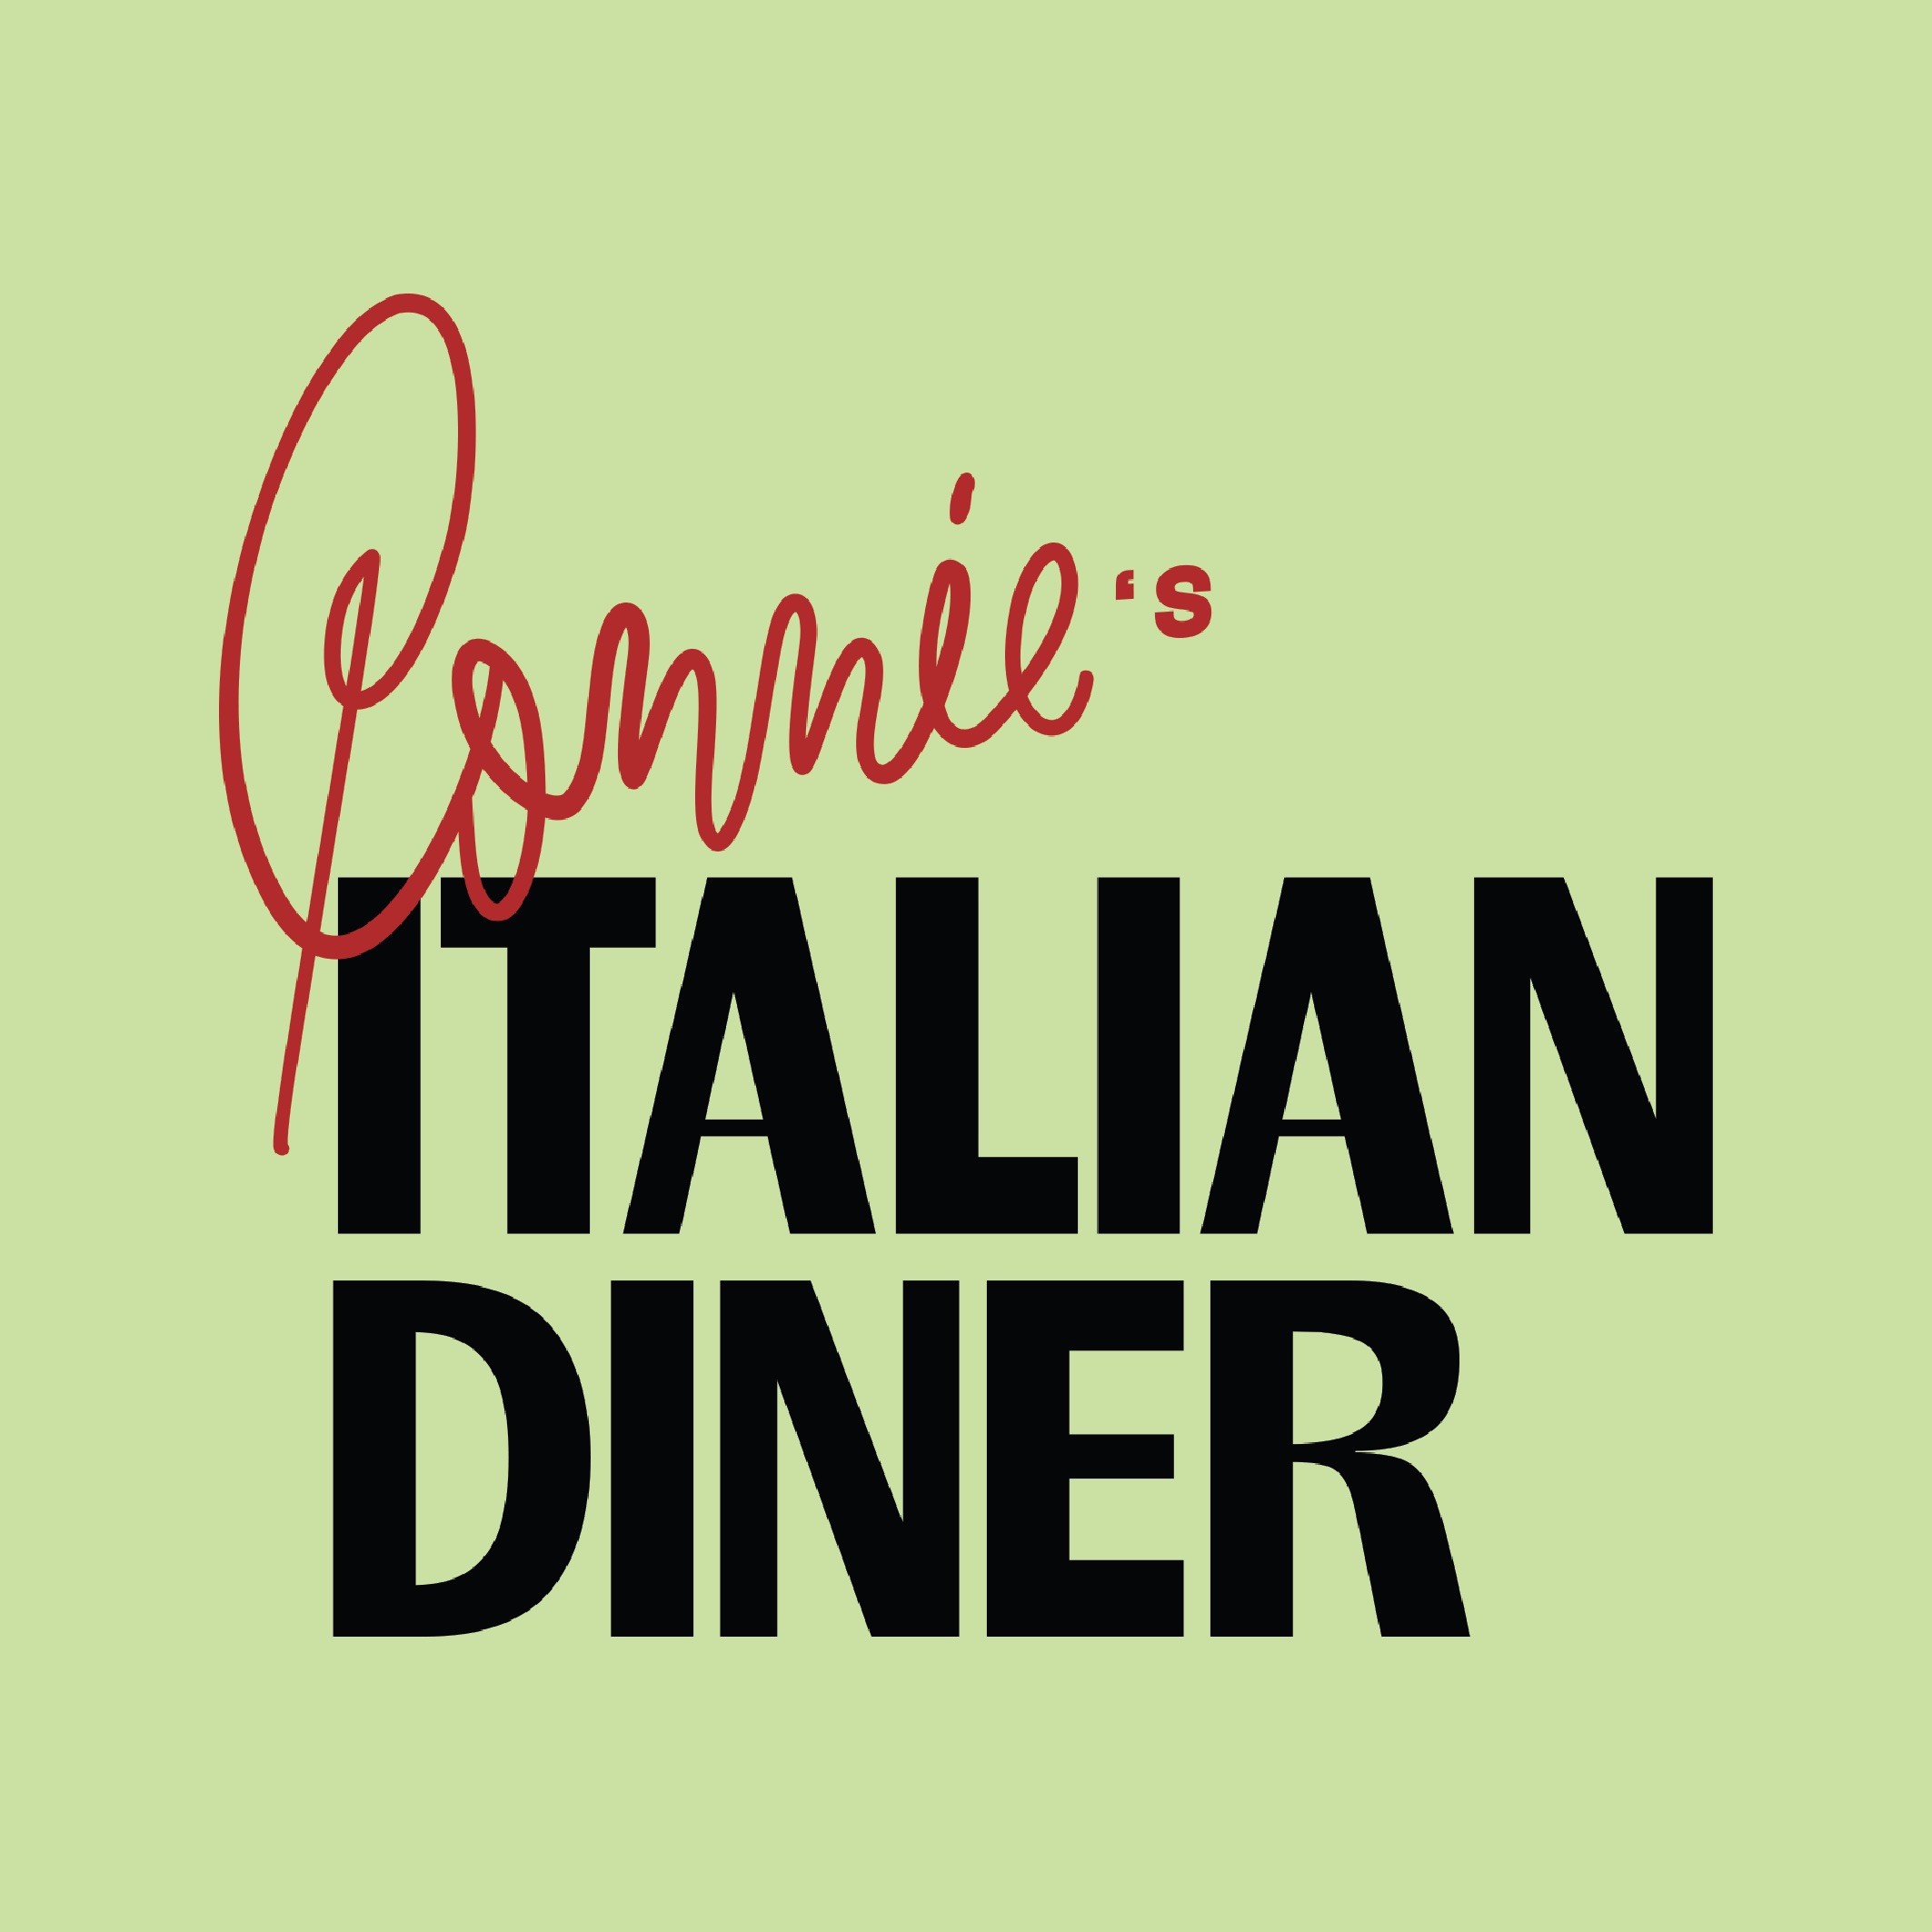 Connie's Italian Diner